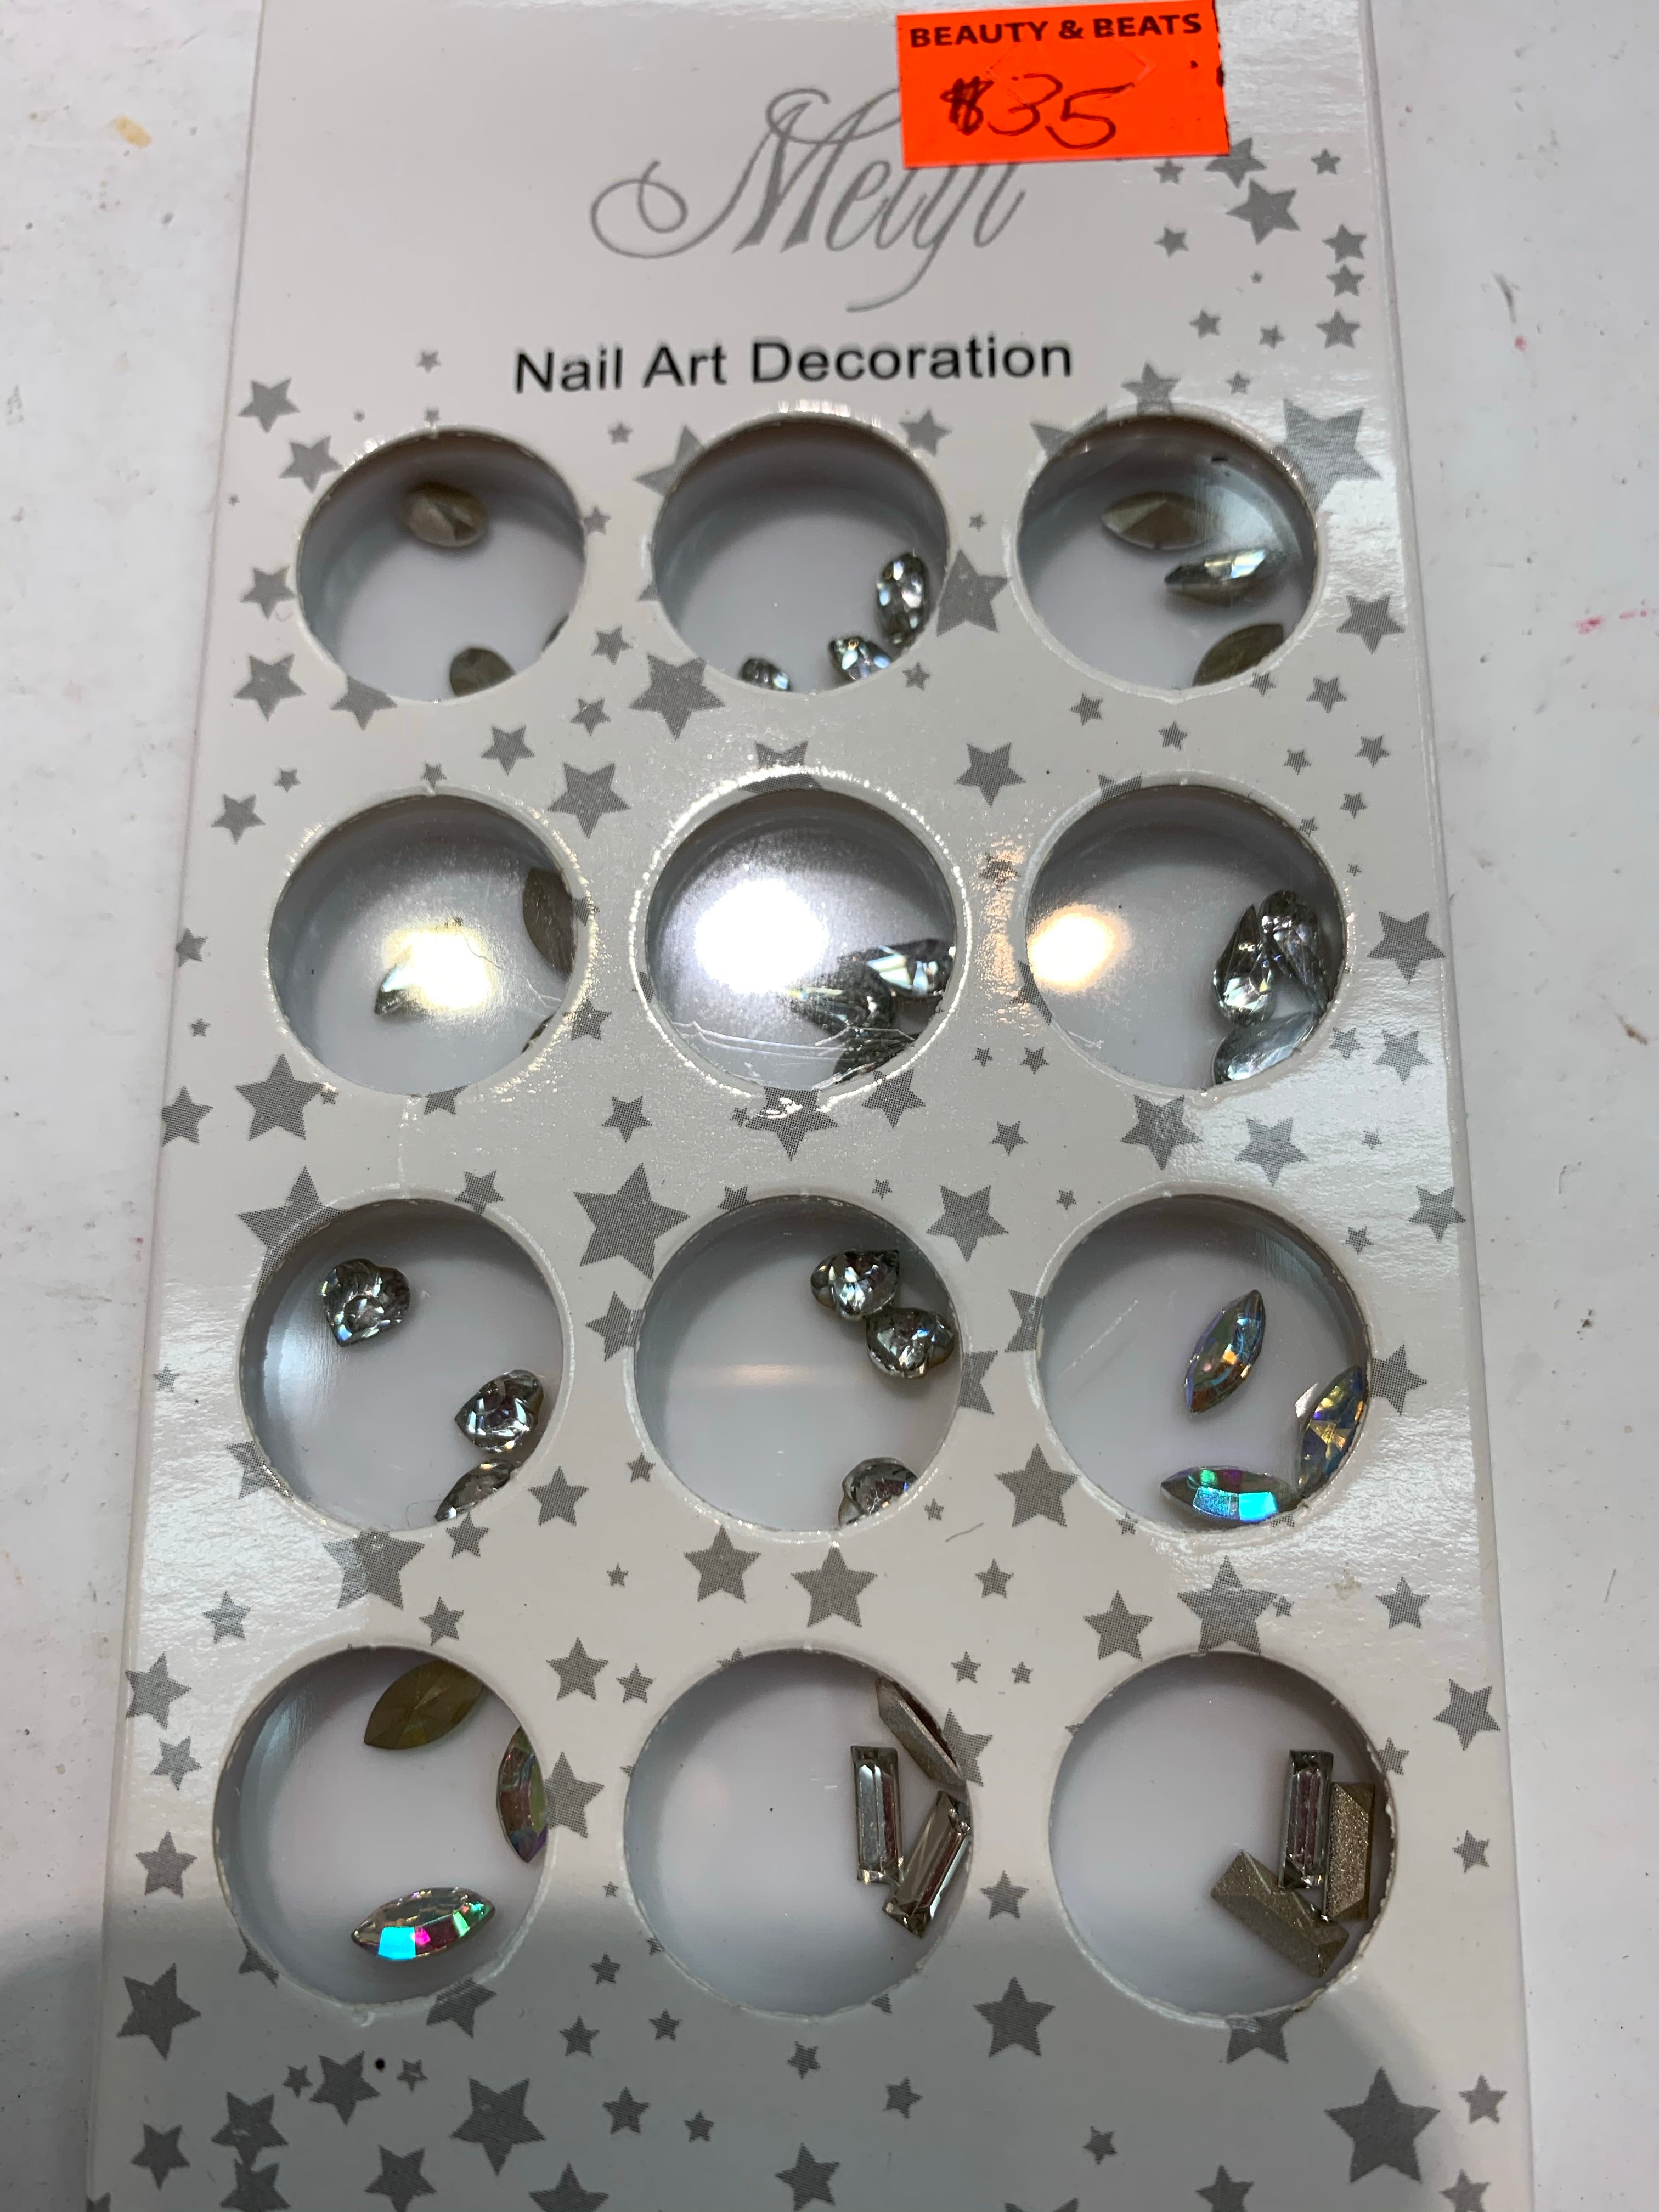 Nail art decorations